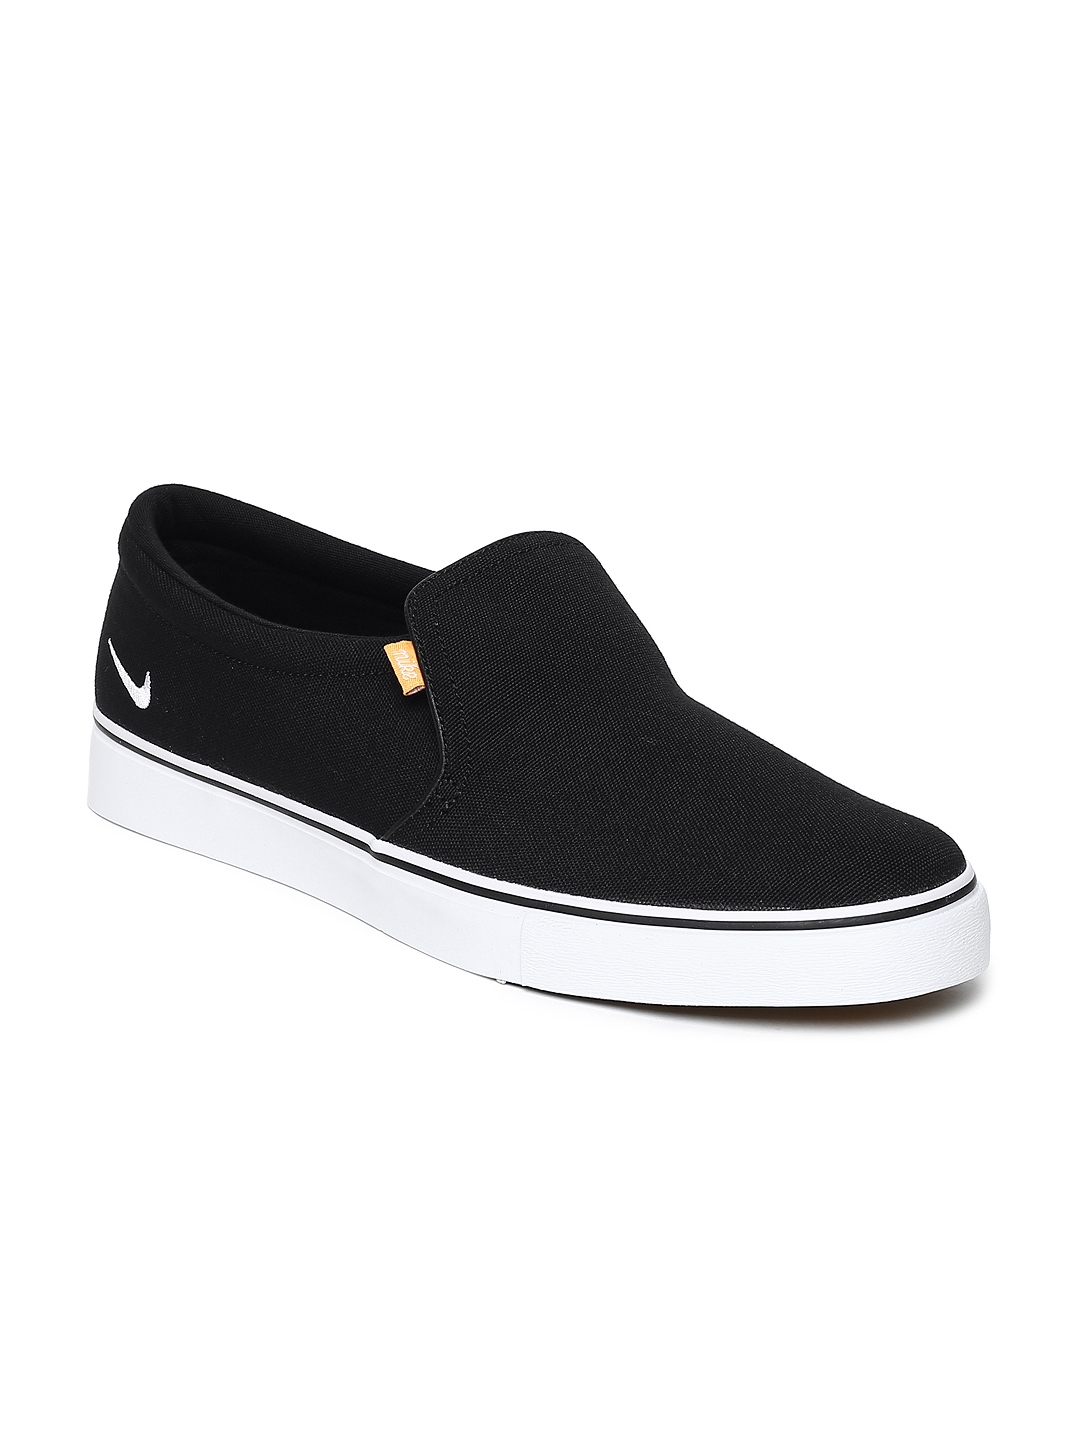 Buy Nike Men Black COURT ROYALE AC SLP Slip On Sneakers - Casual Shoes ...